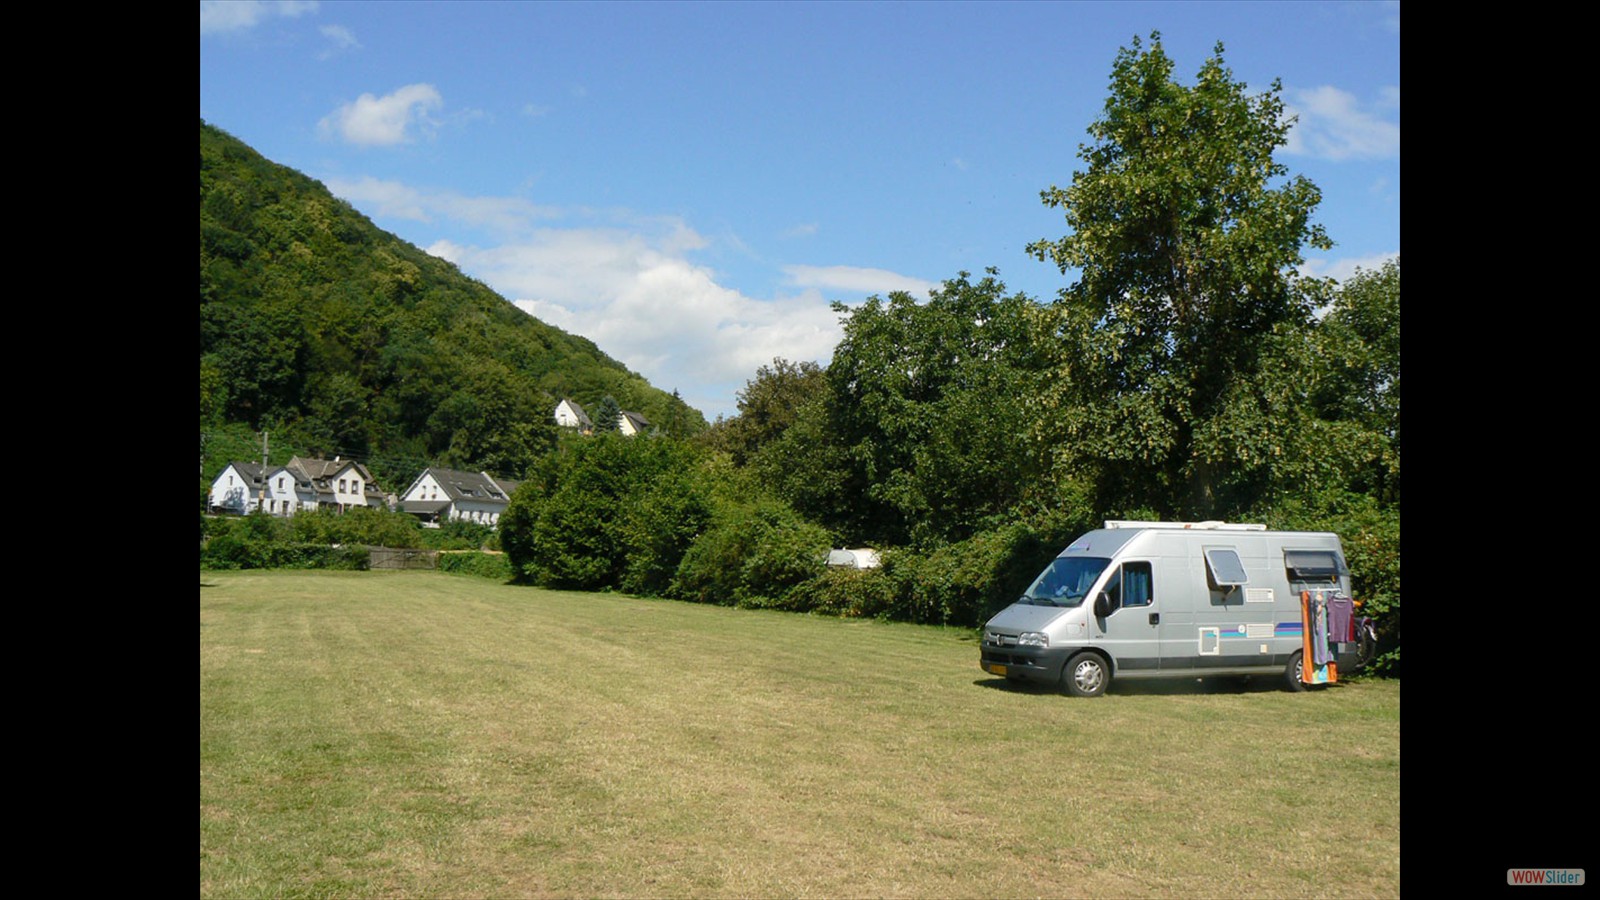 Het camperveld op camping Marienort.